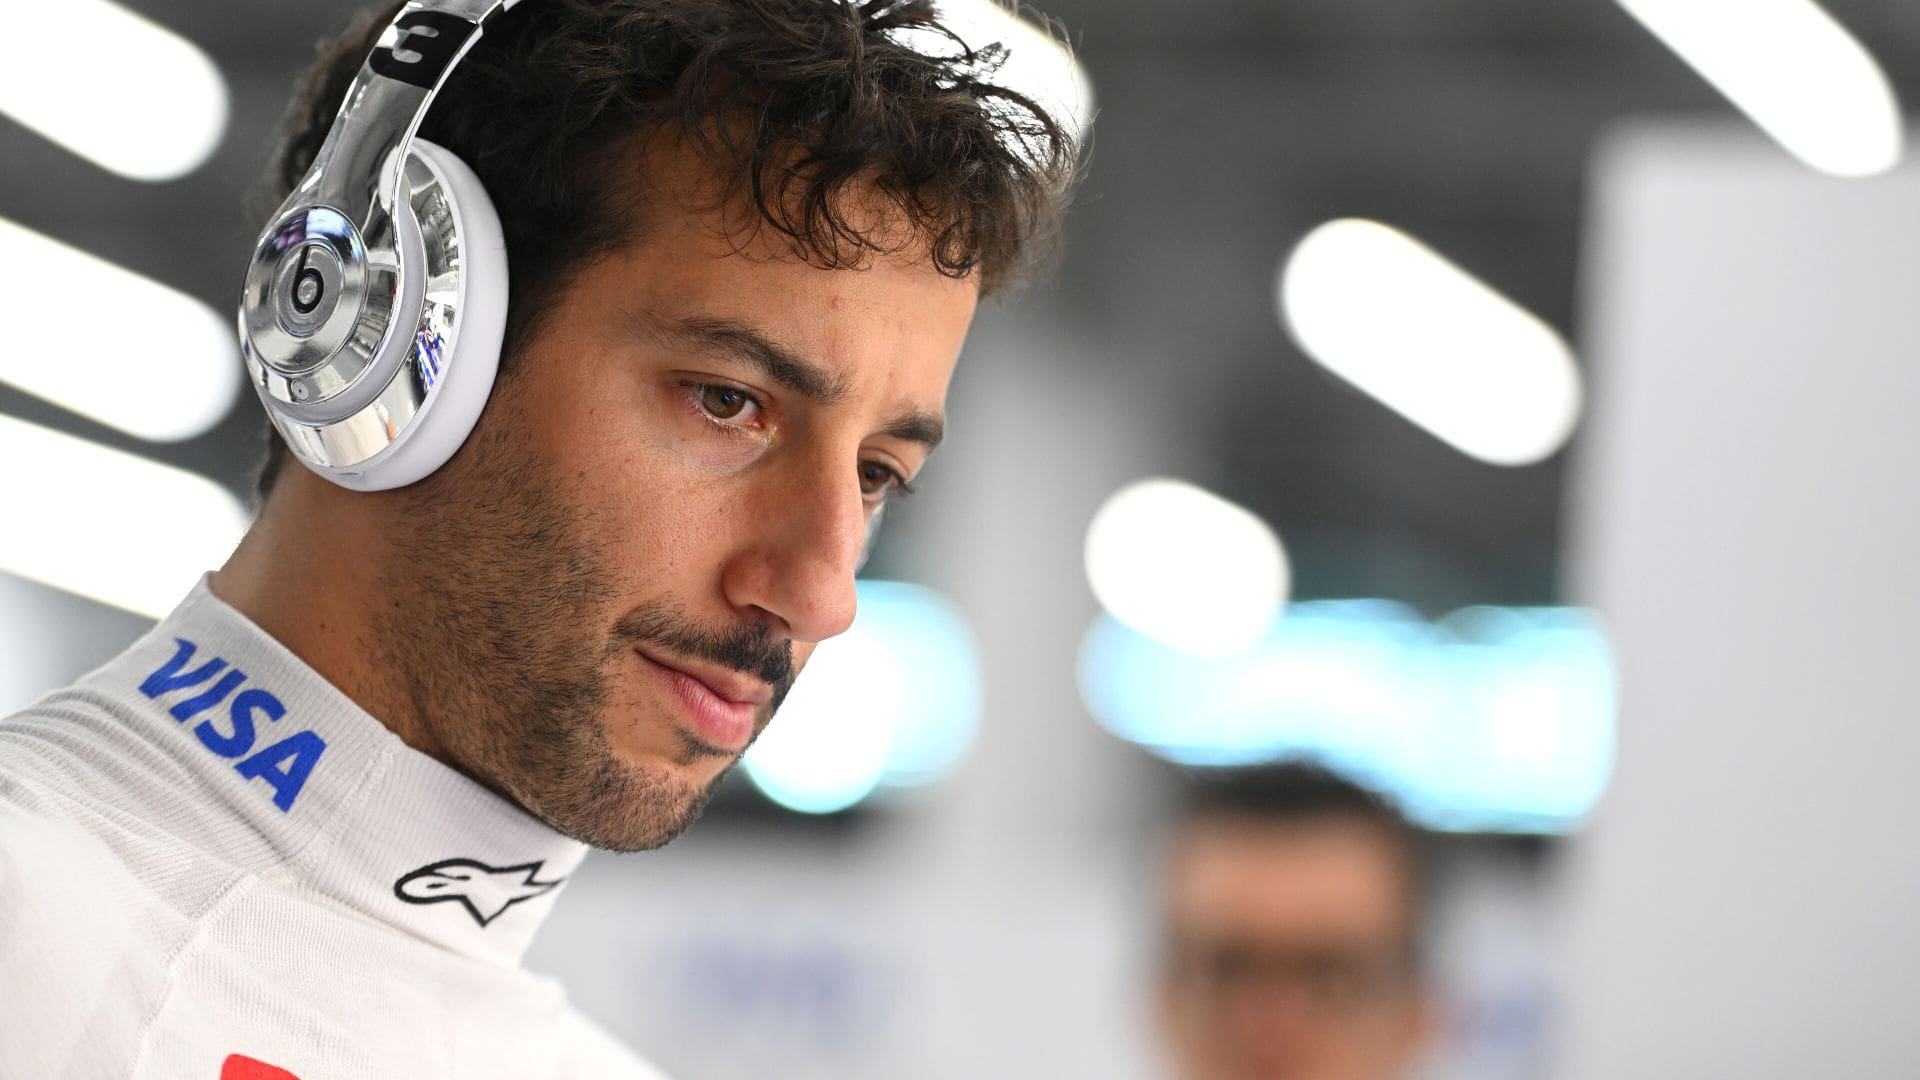 Lawson Could Replace Daniel Ricciardo Soon - Van Der Garde | F1 News